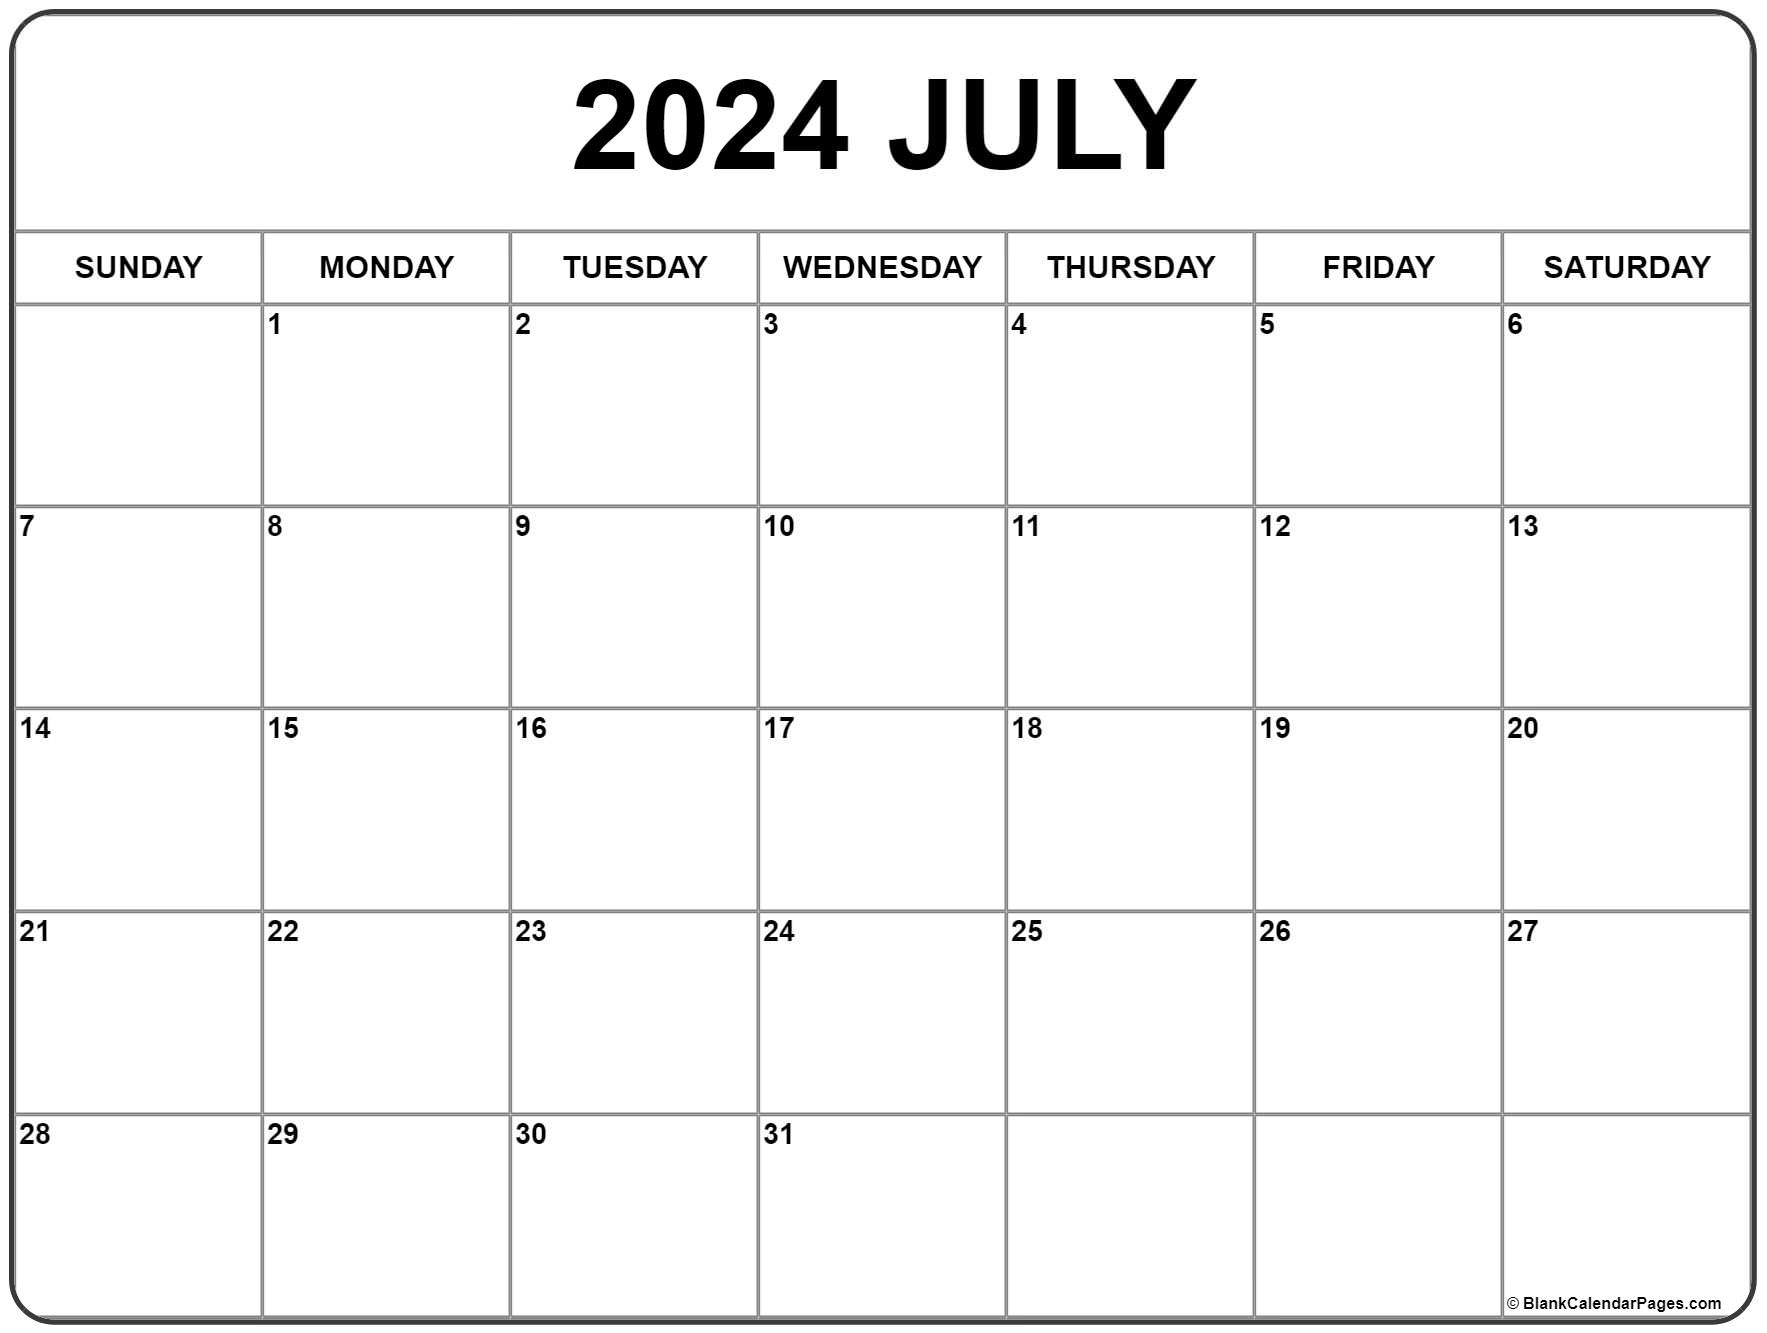 July 2024 Calendar | Free Printable Calendar within Blank July 2024 Calendar Printable